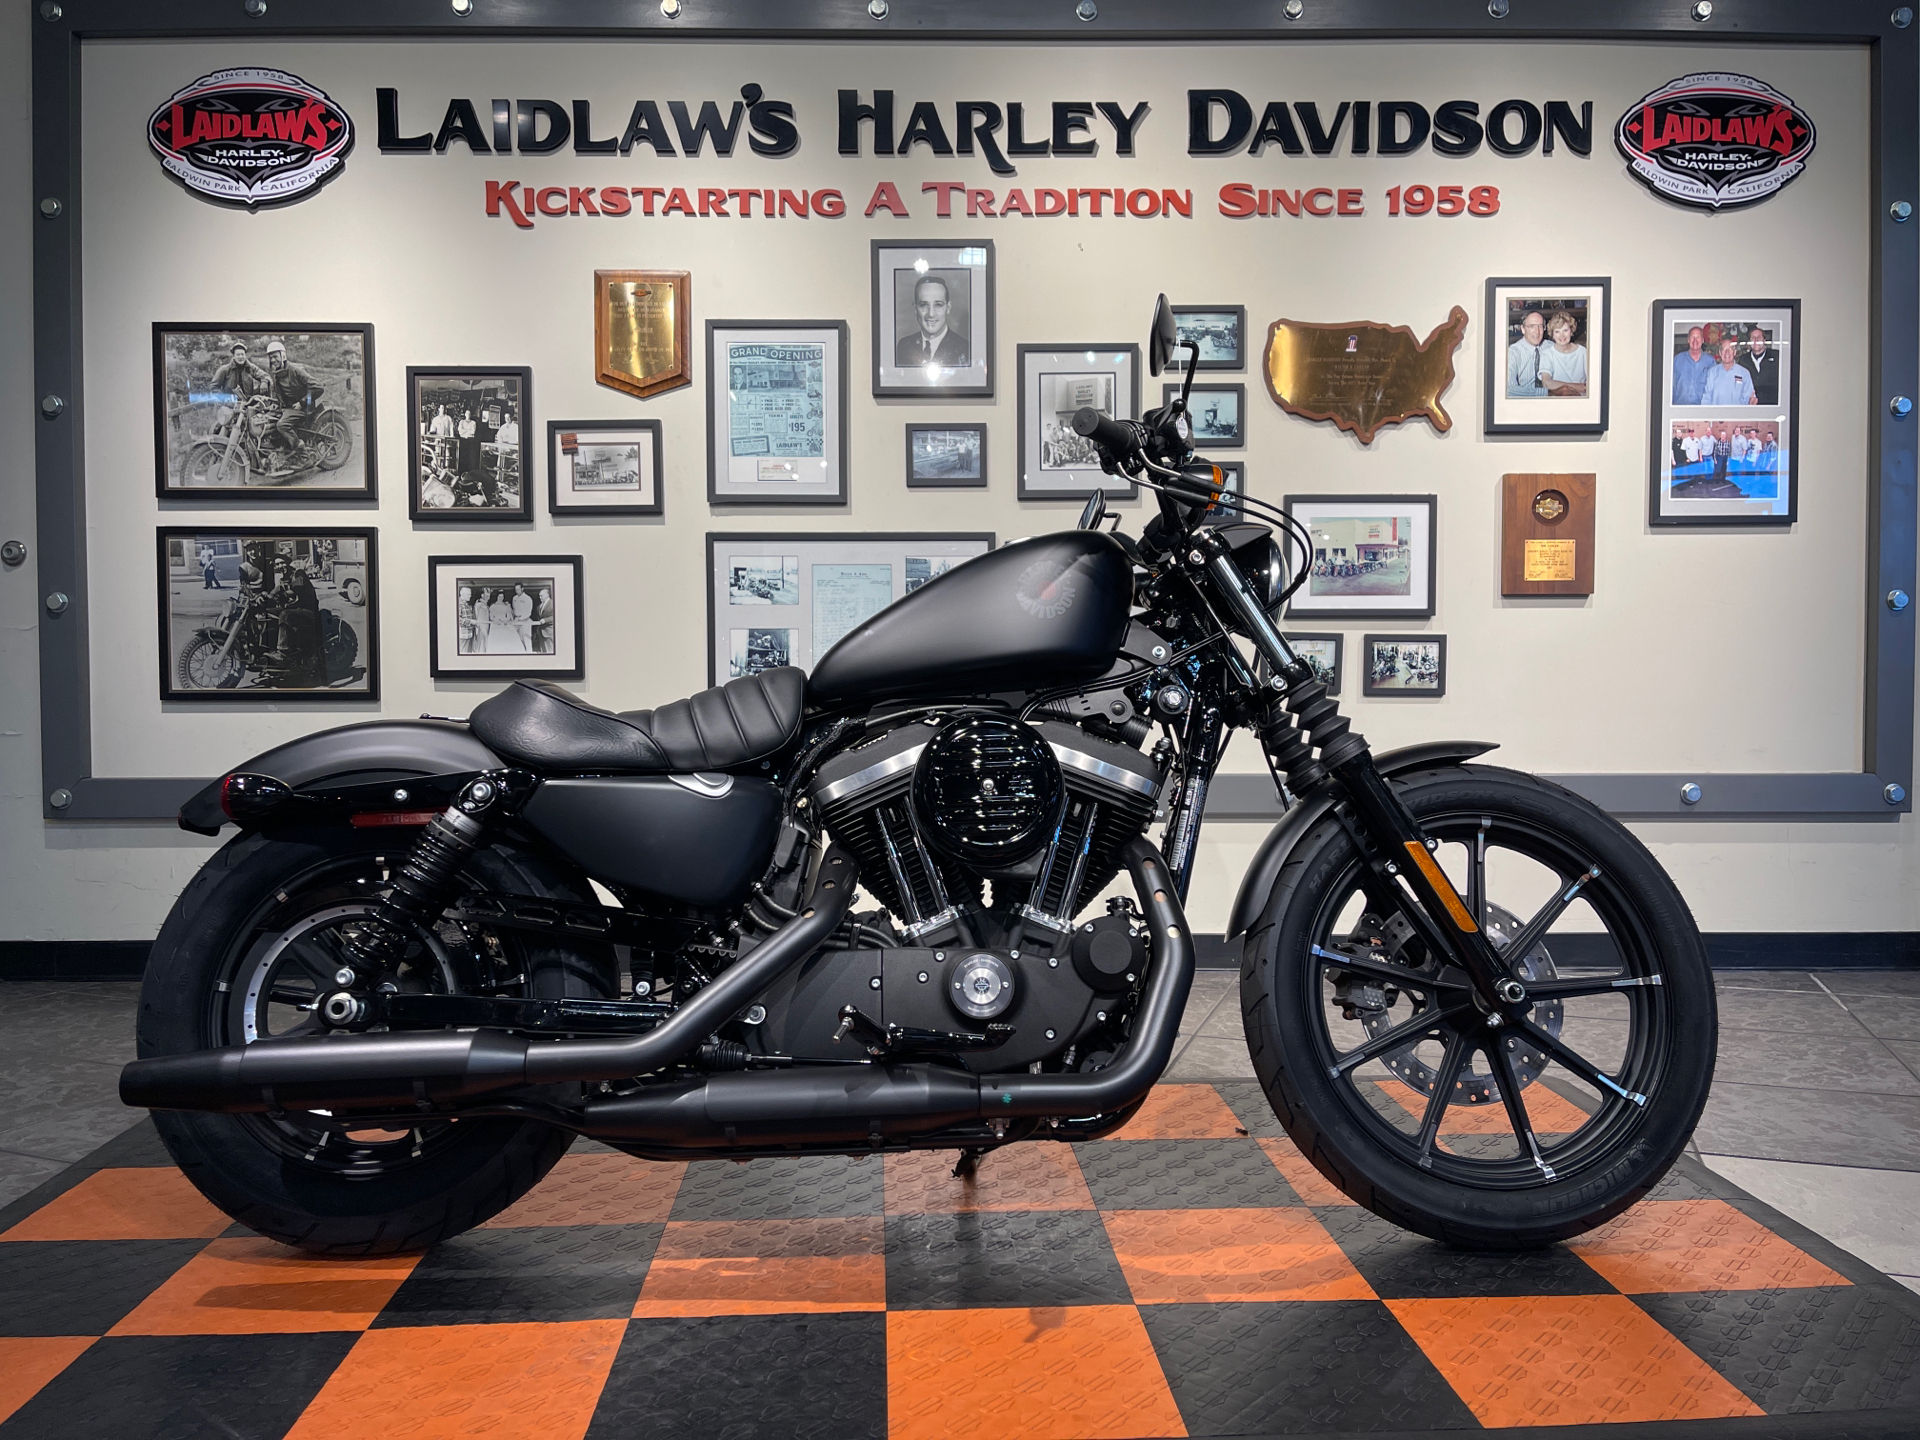 New 2021 Harley Davidson Iron 883 Black Denim Baldwin Park Ca 29322